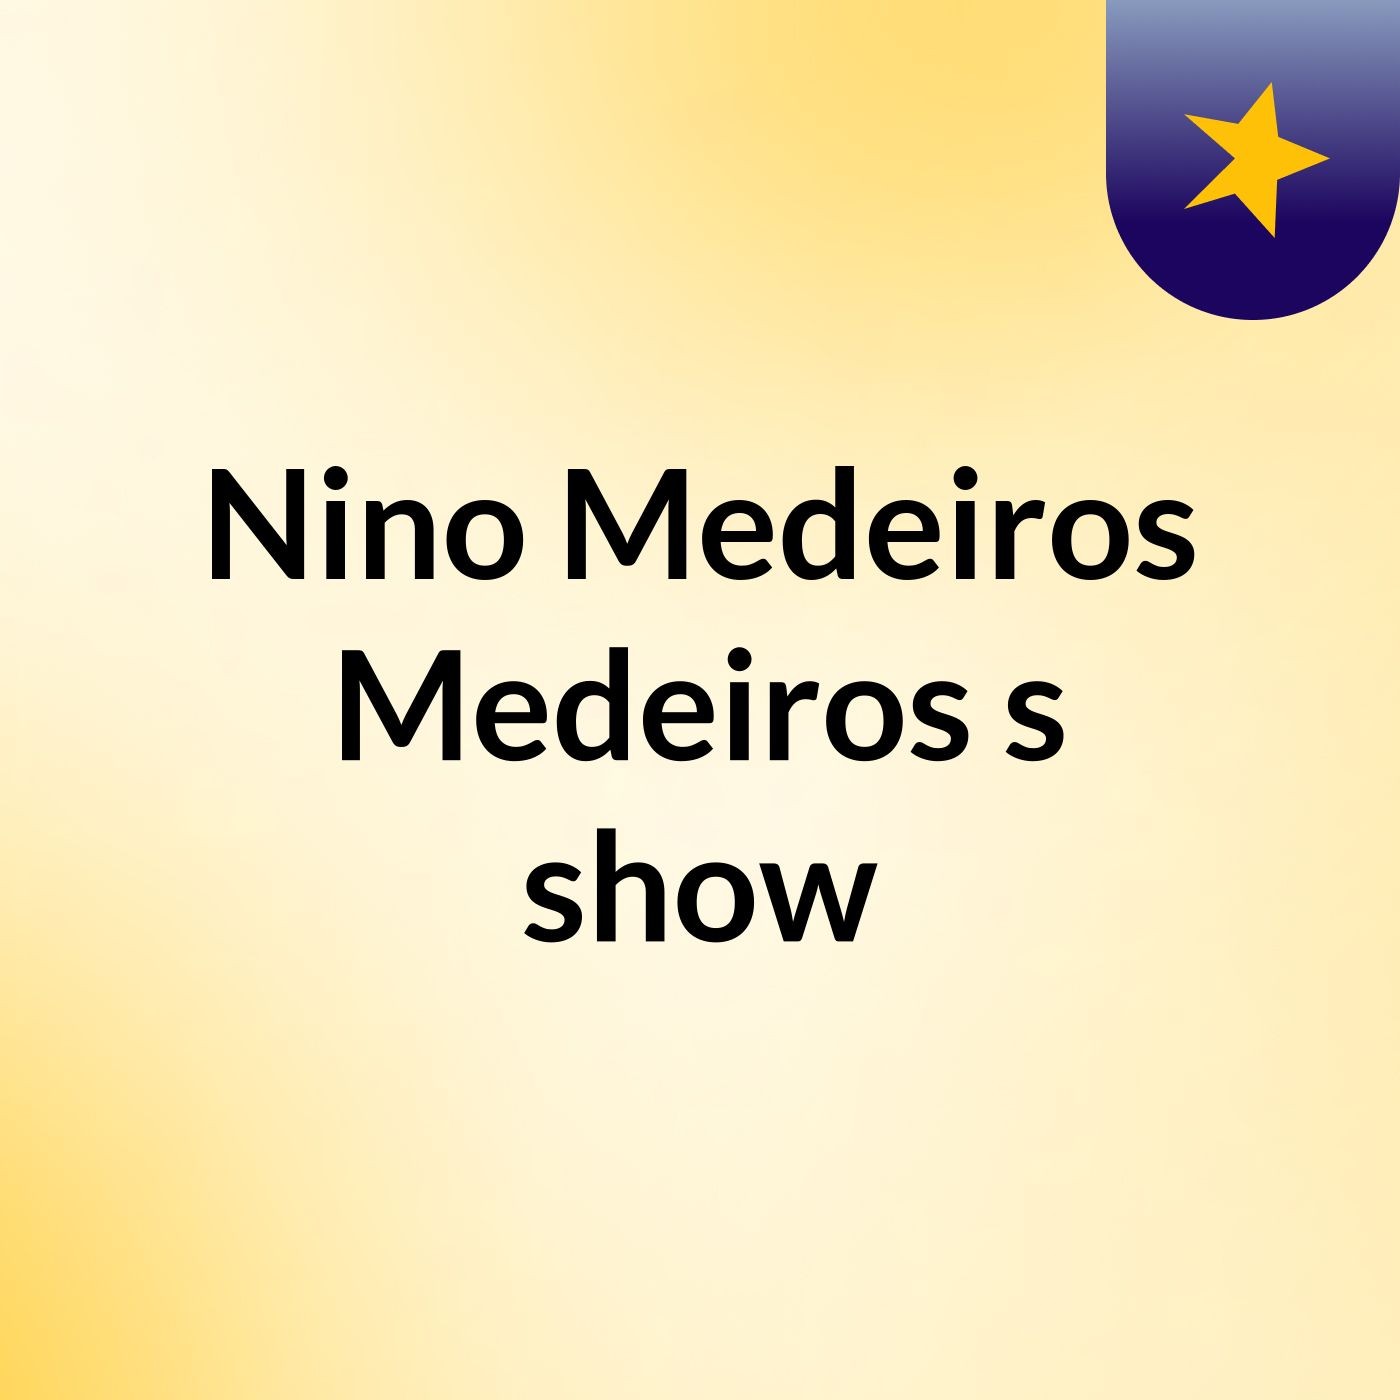 Nino Medeiros Medeiros's show